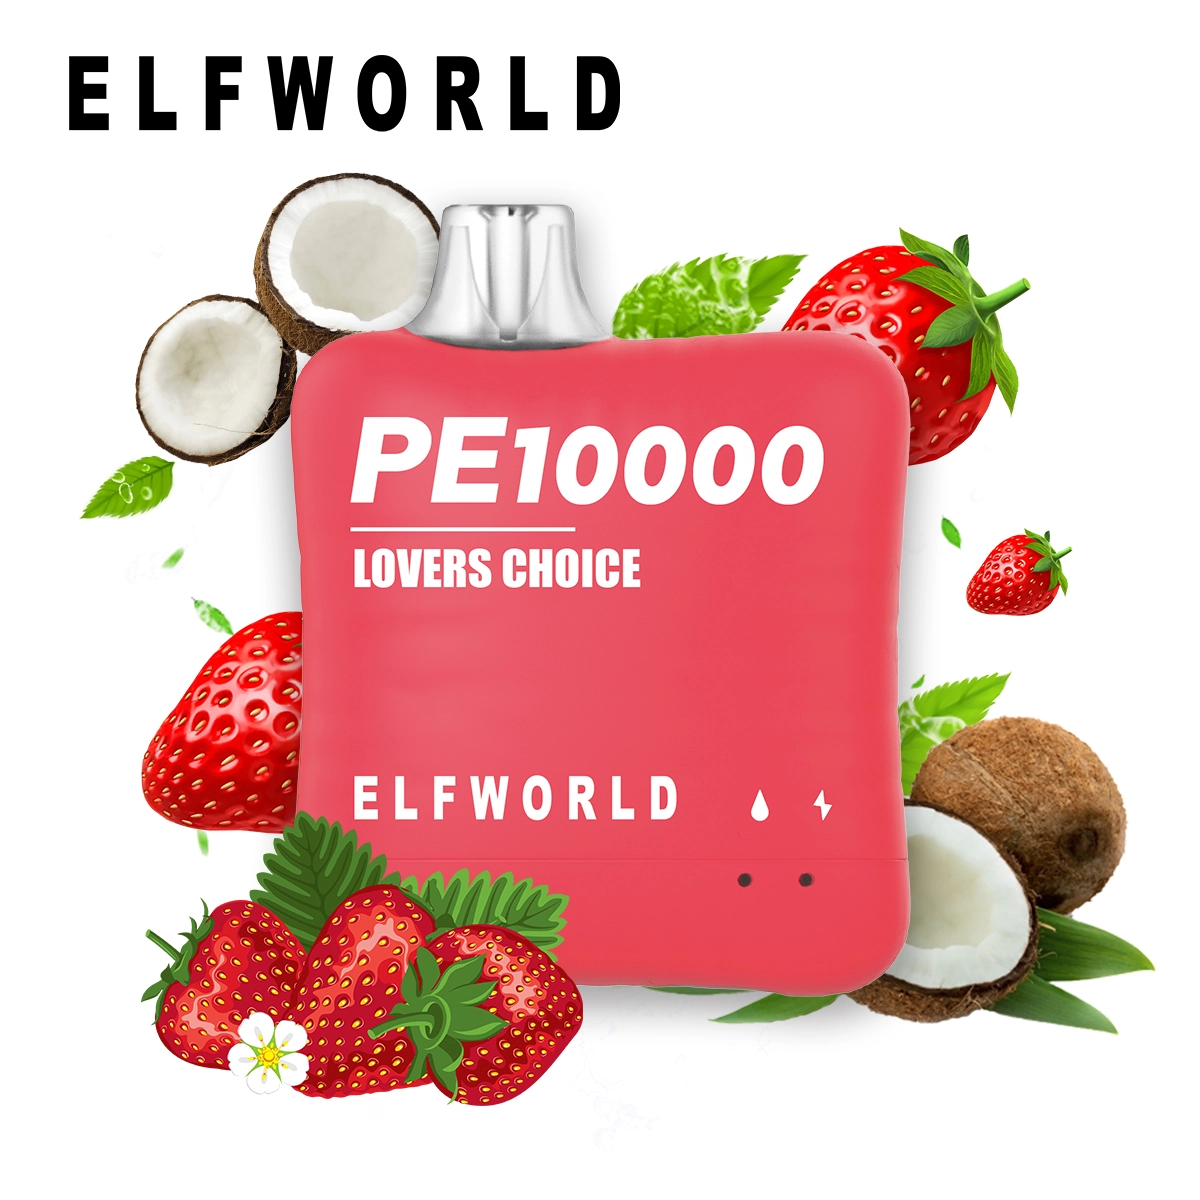 Elf World PE 10000 Lovers Choice